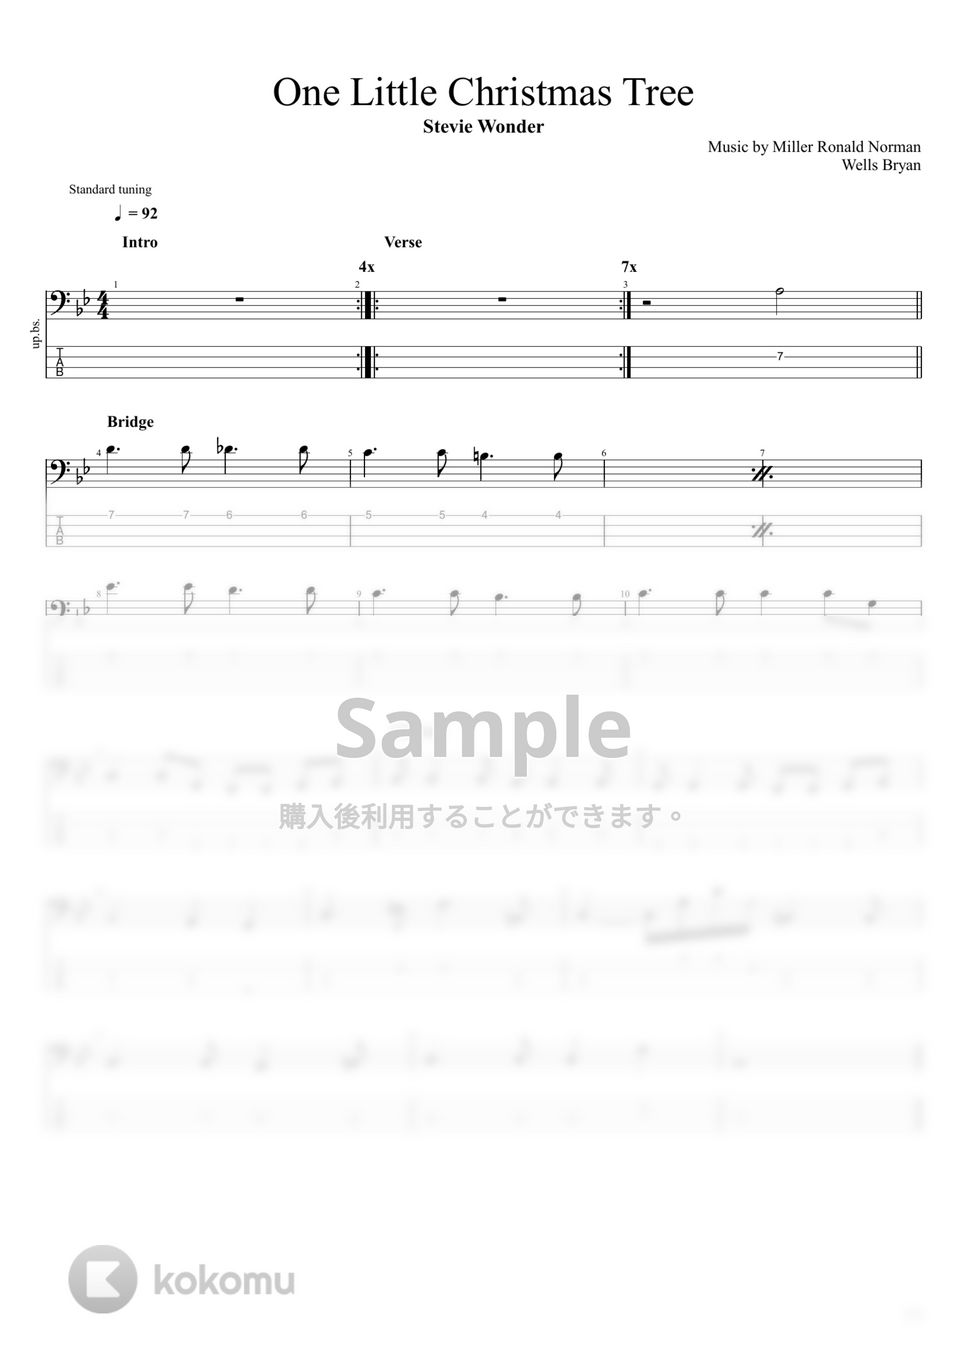 Stevie Wonder - One Little Christmas Tree by まっきん